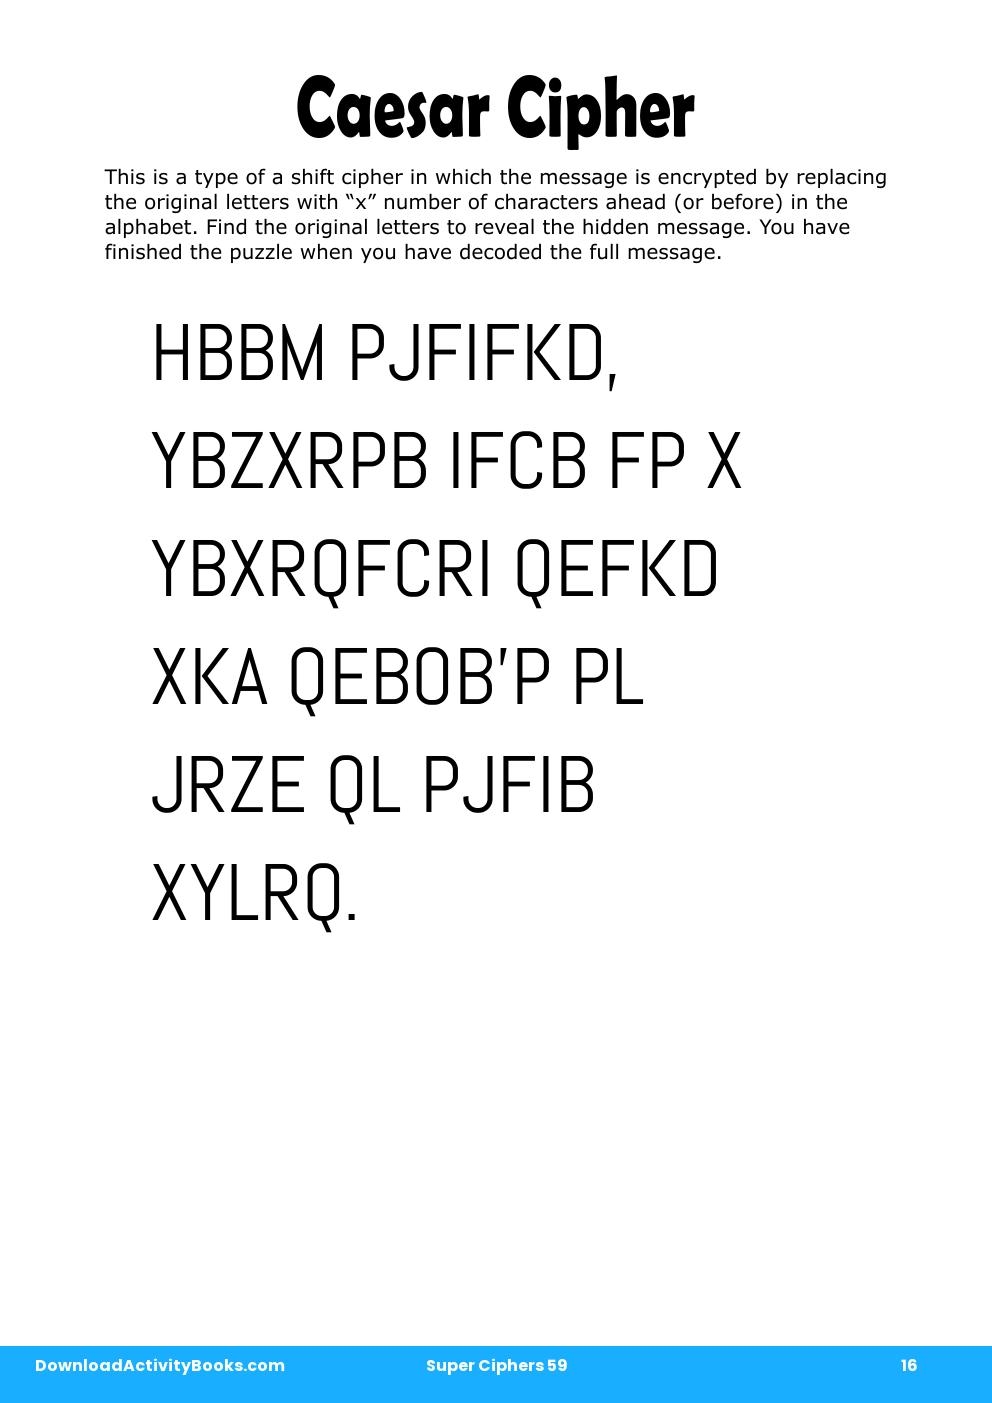 Caesar Cipher in Super Ciphers 59